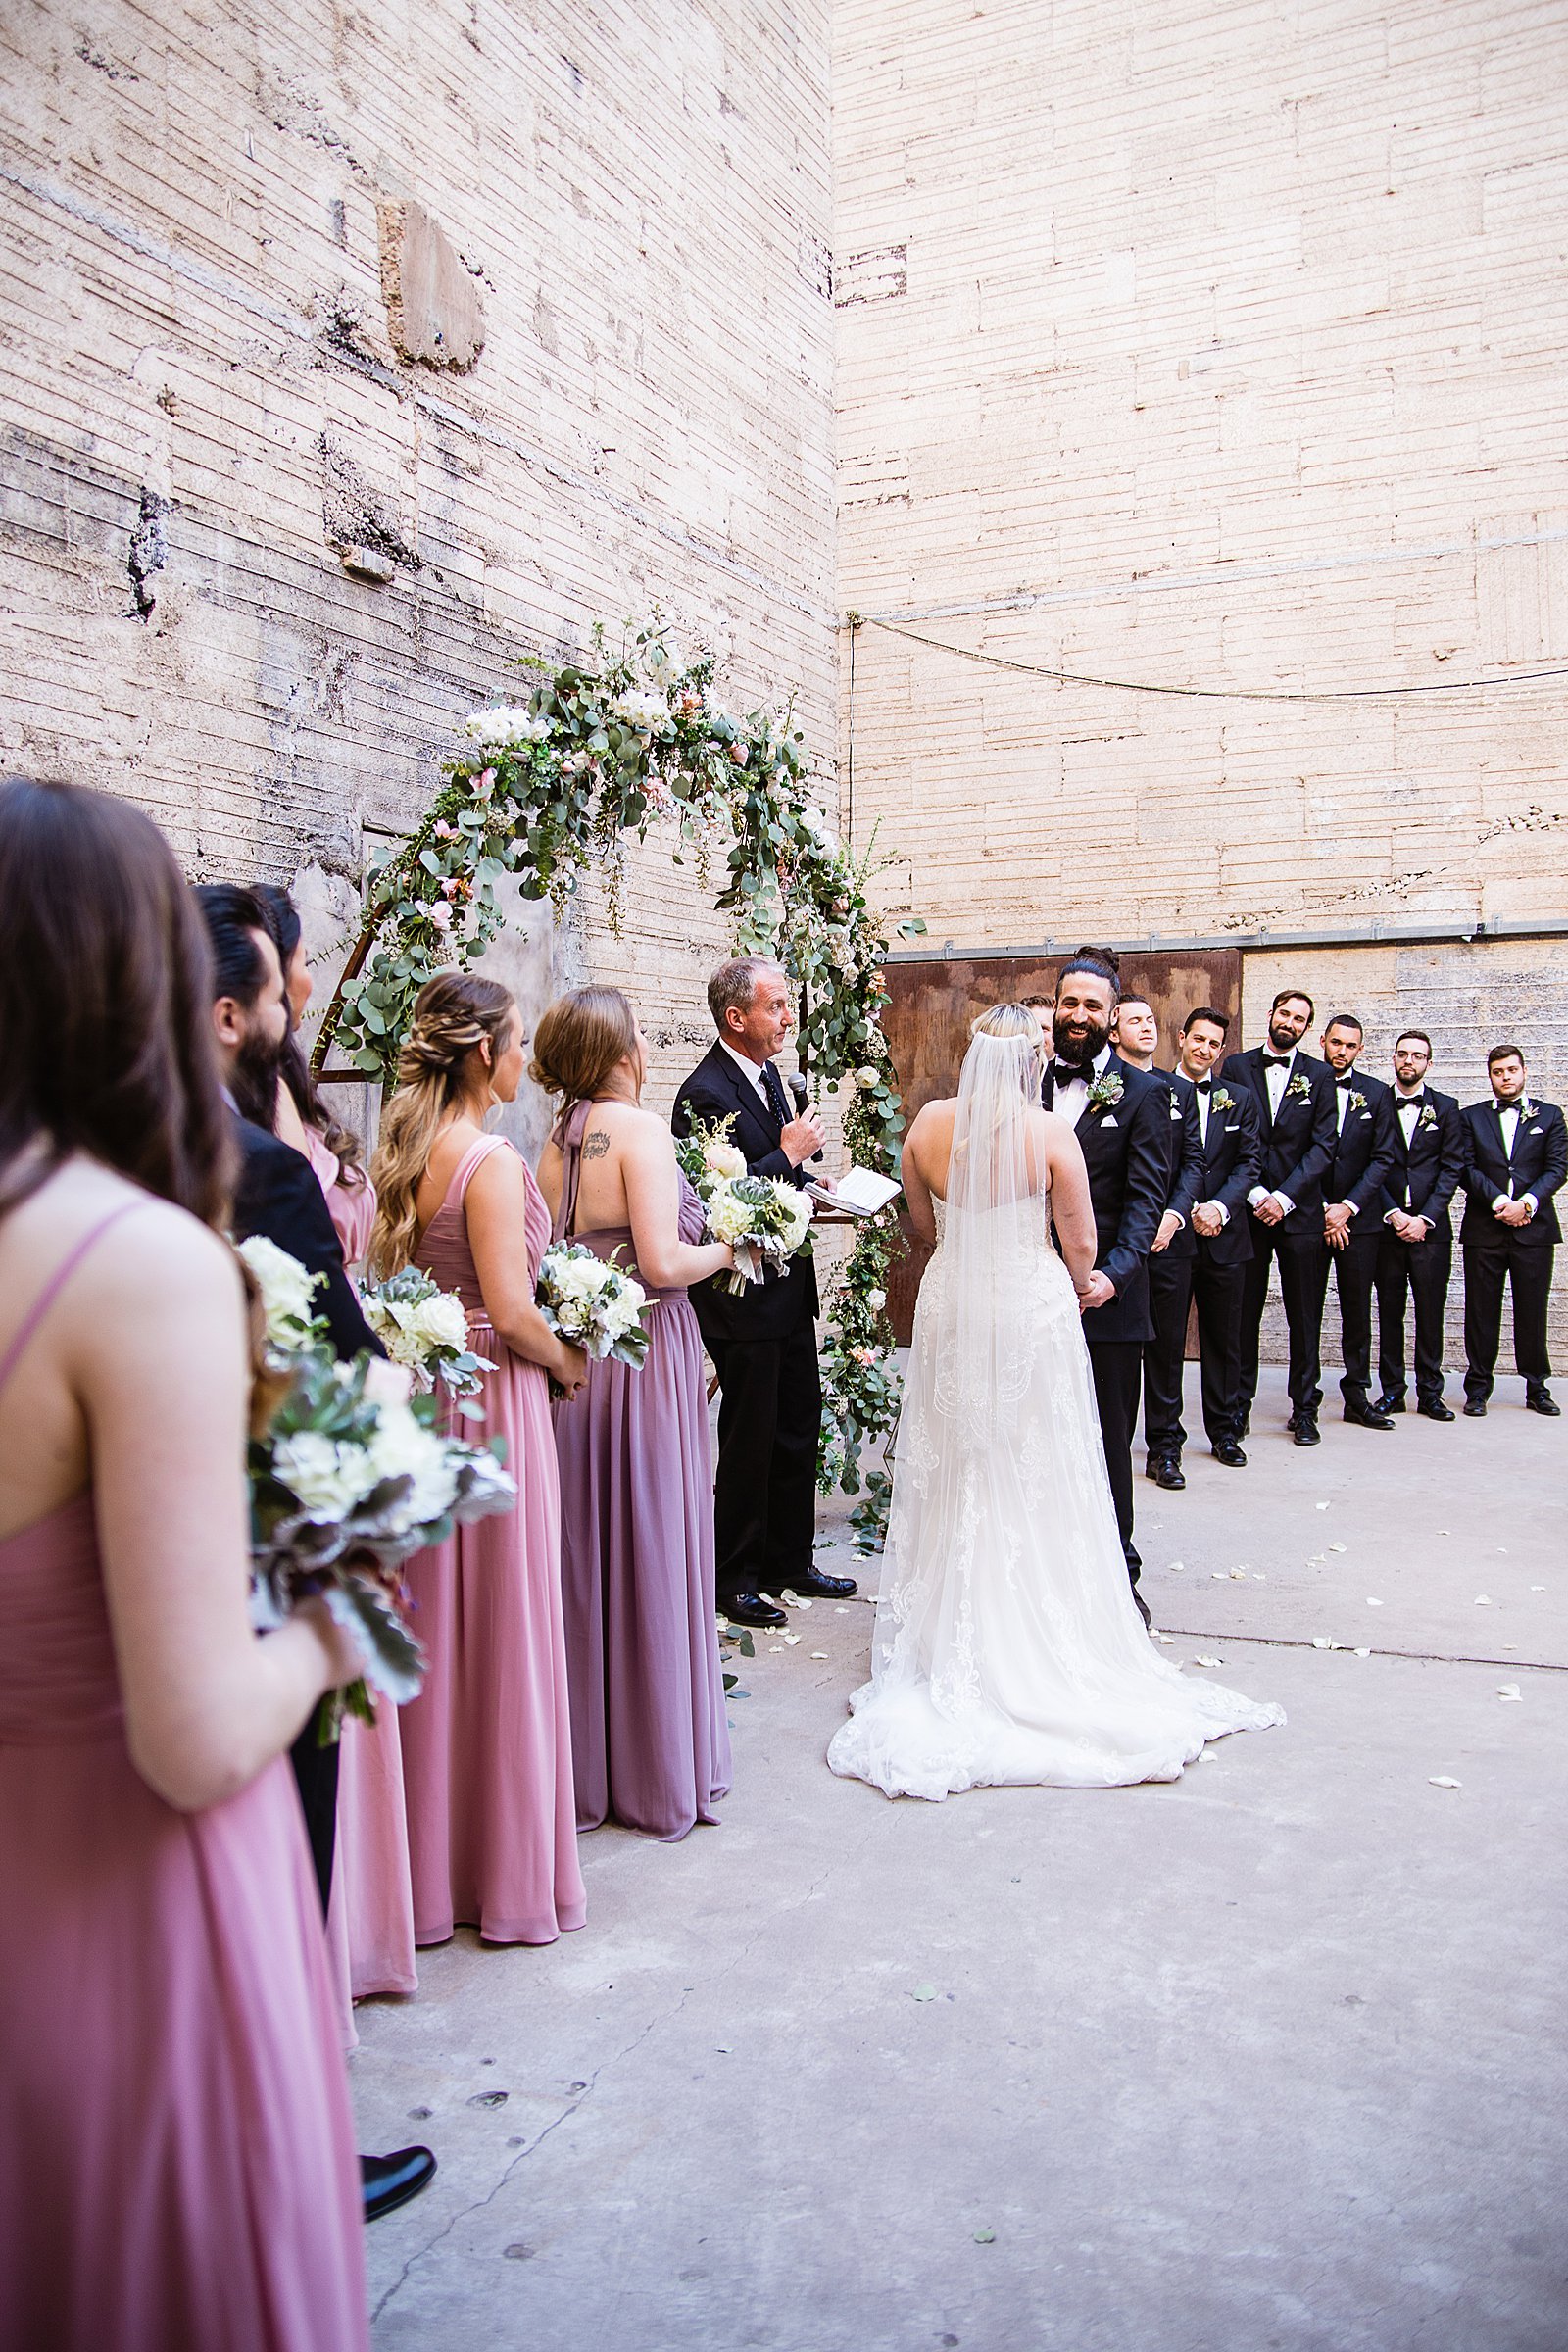 Wedding ceremony at The Ice House by Phoenix wedding photographer PMA Photography.